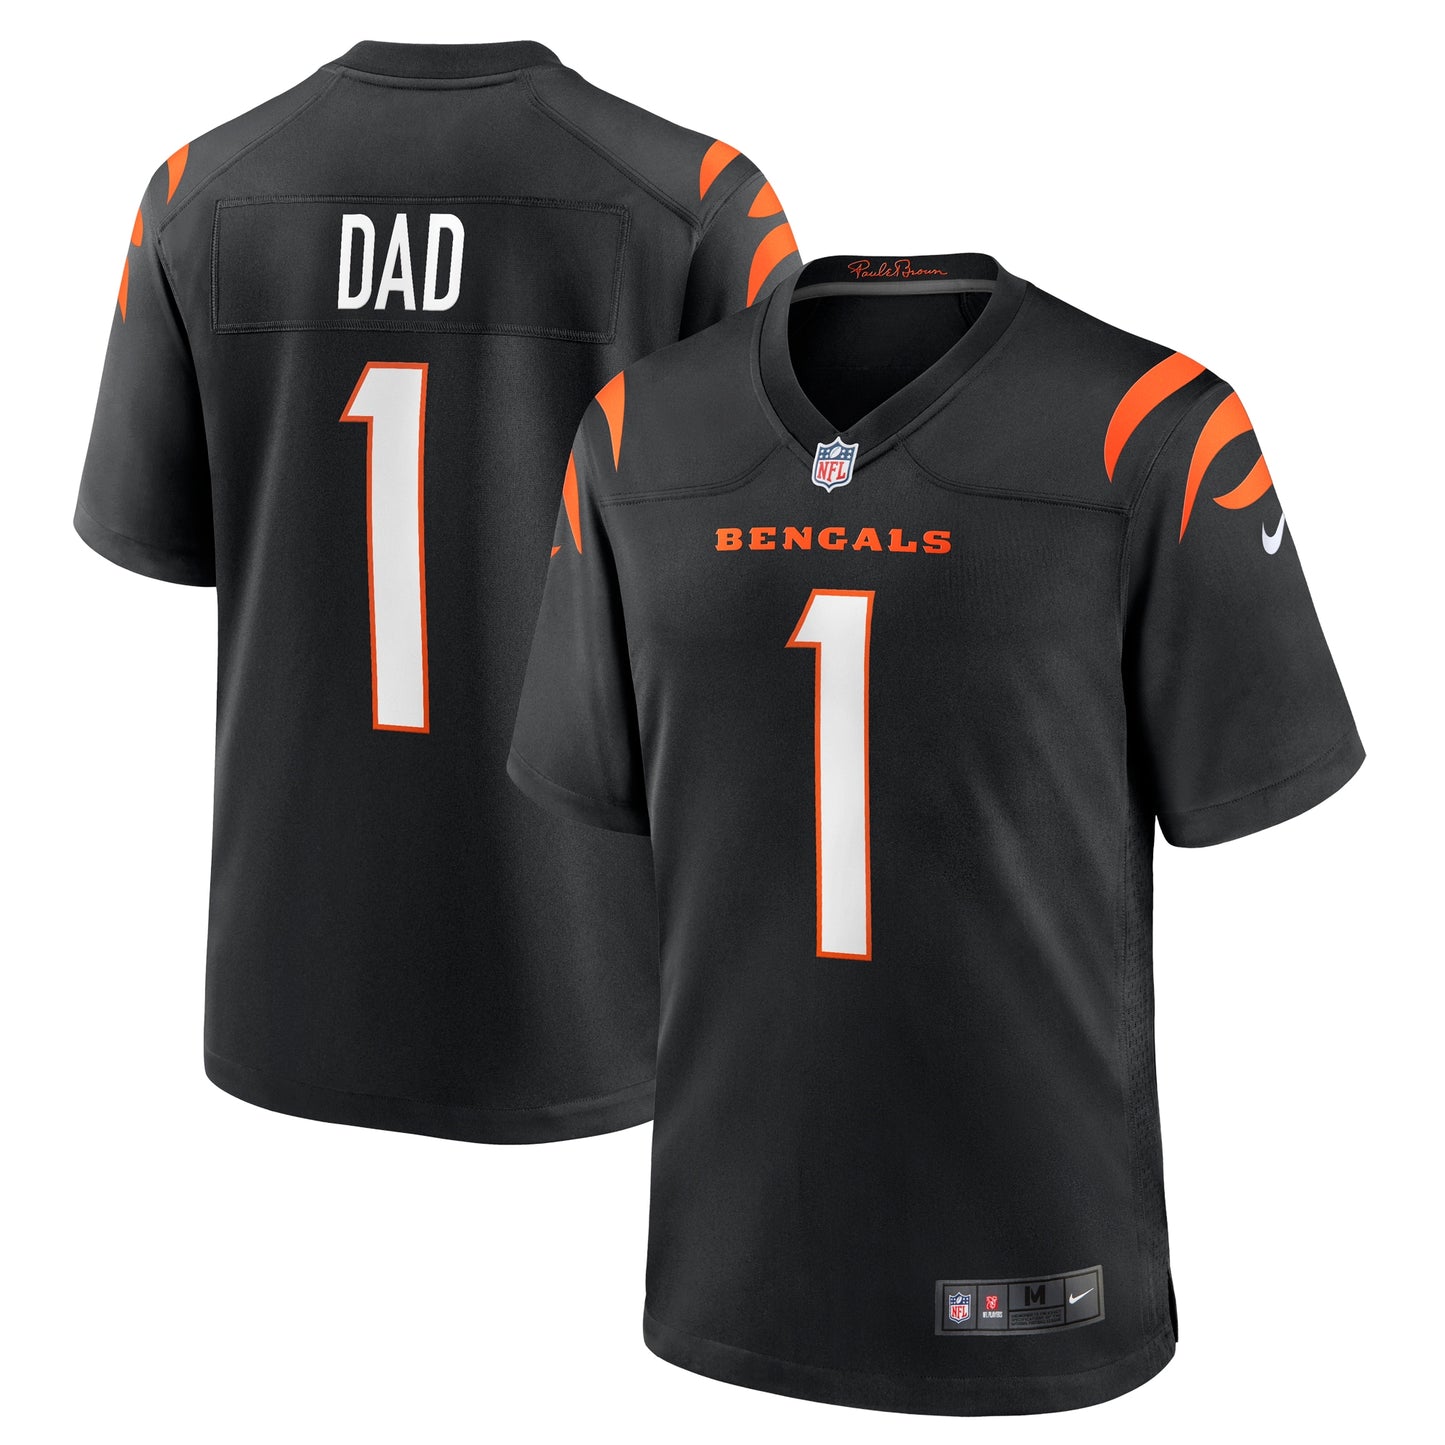 Number 1 Dad Cincinnati Bengals Nike Game Jersey - Black